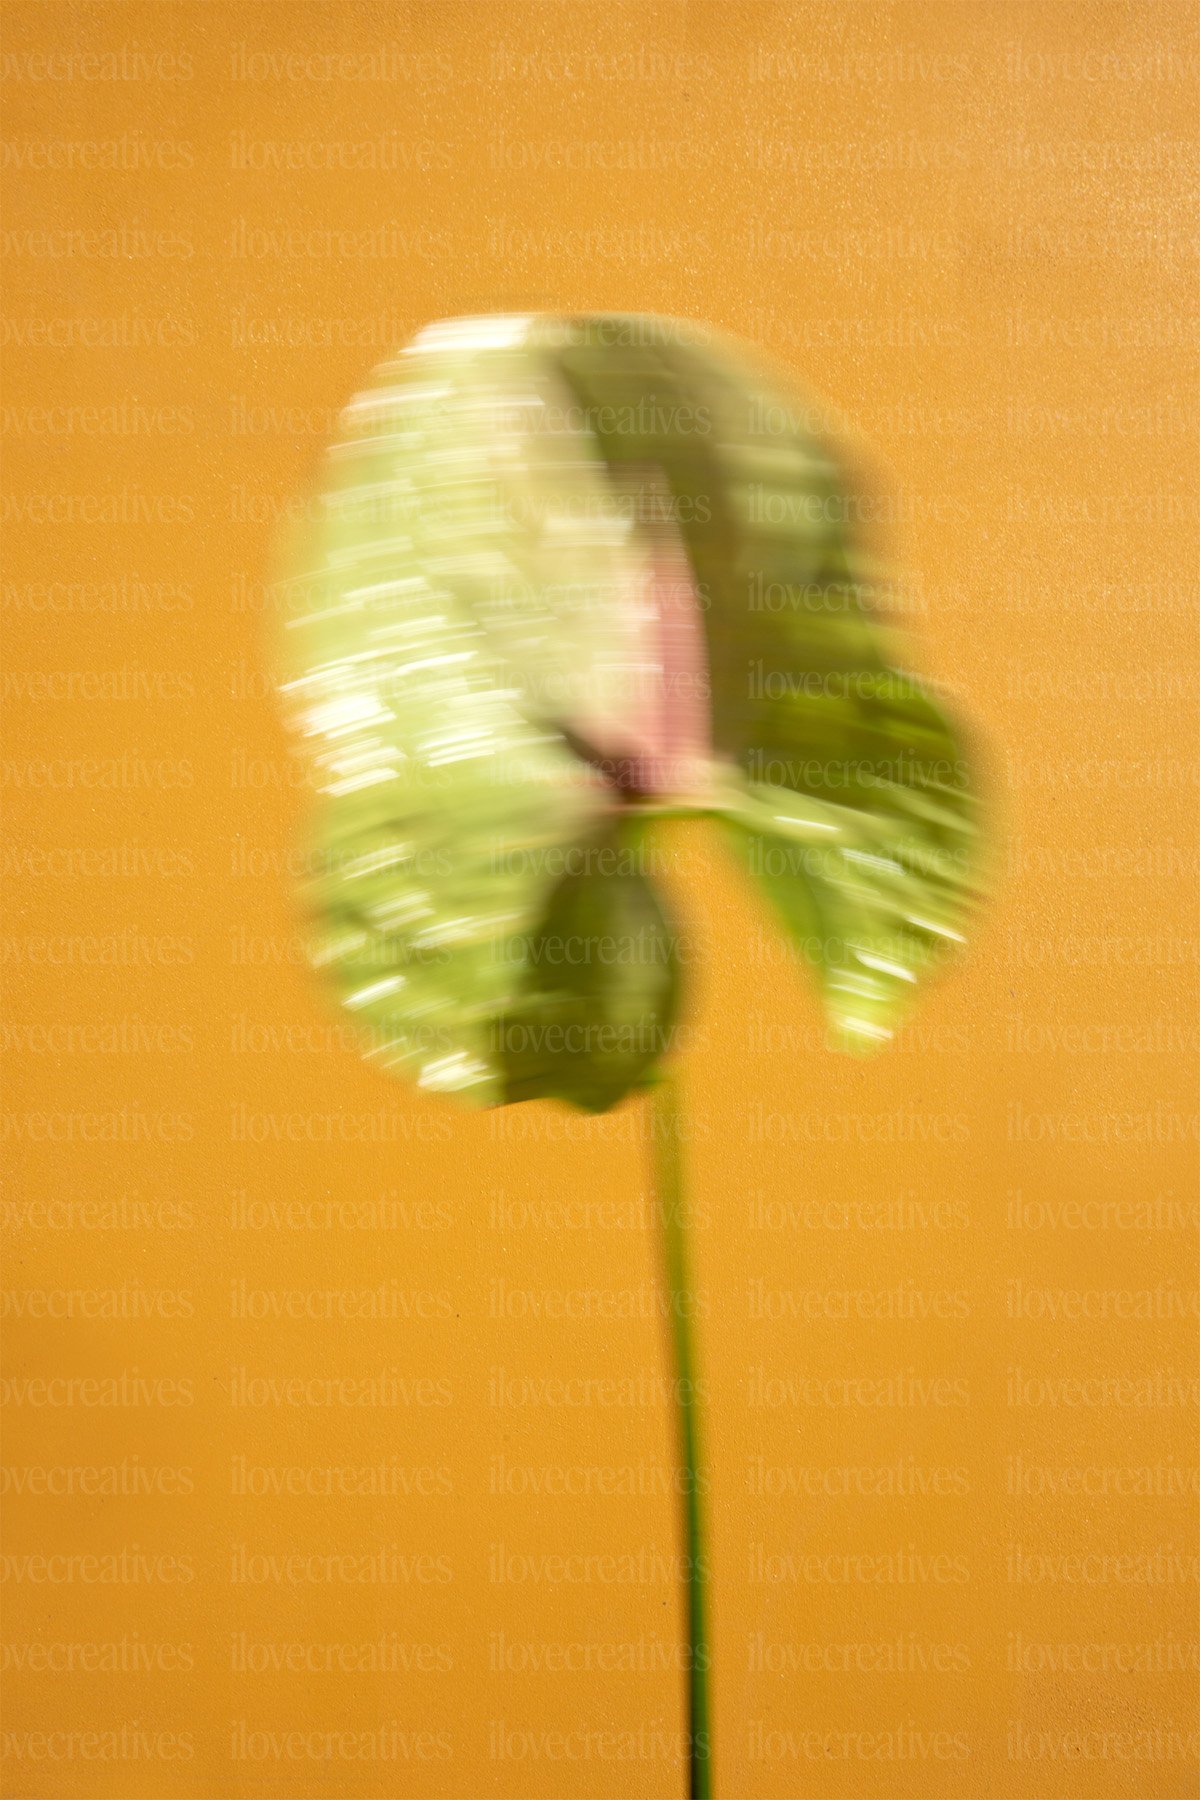 ilovecreatives-amiga-stock-photo-pack-floral-7.jpg